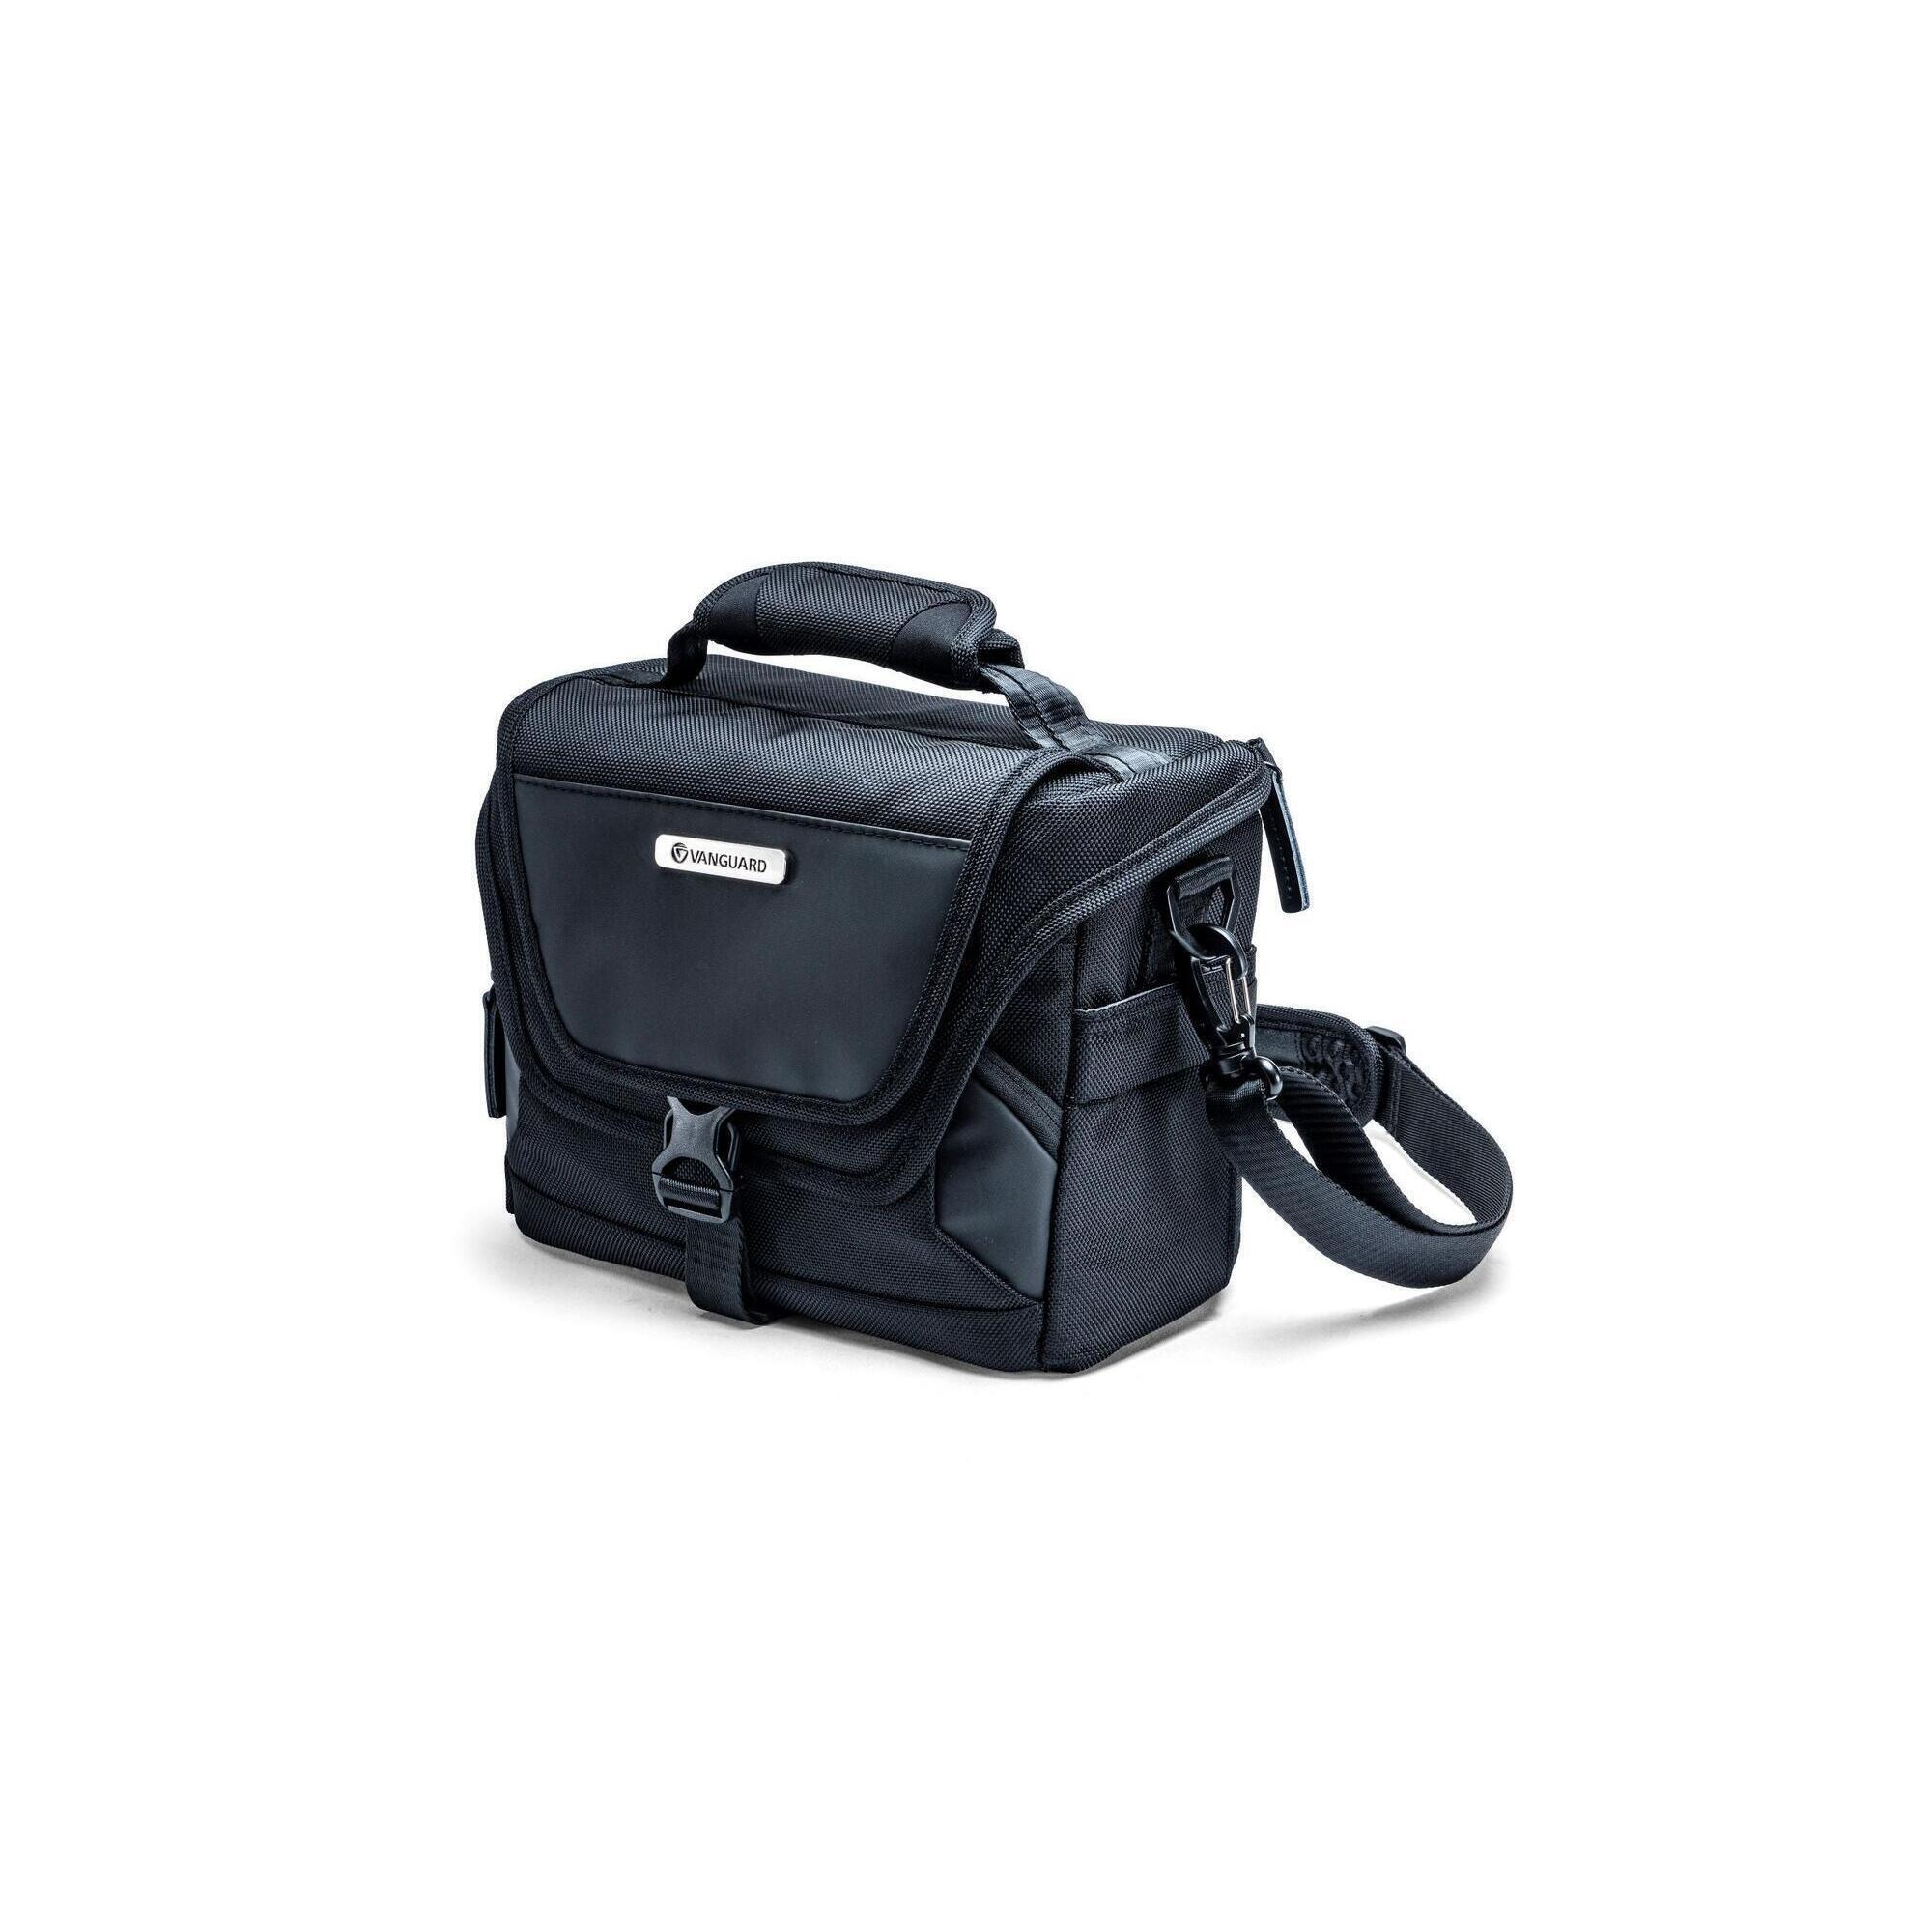 VANGUARD VEO SELECT 22S BK - Small Shoulder Bag - Black